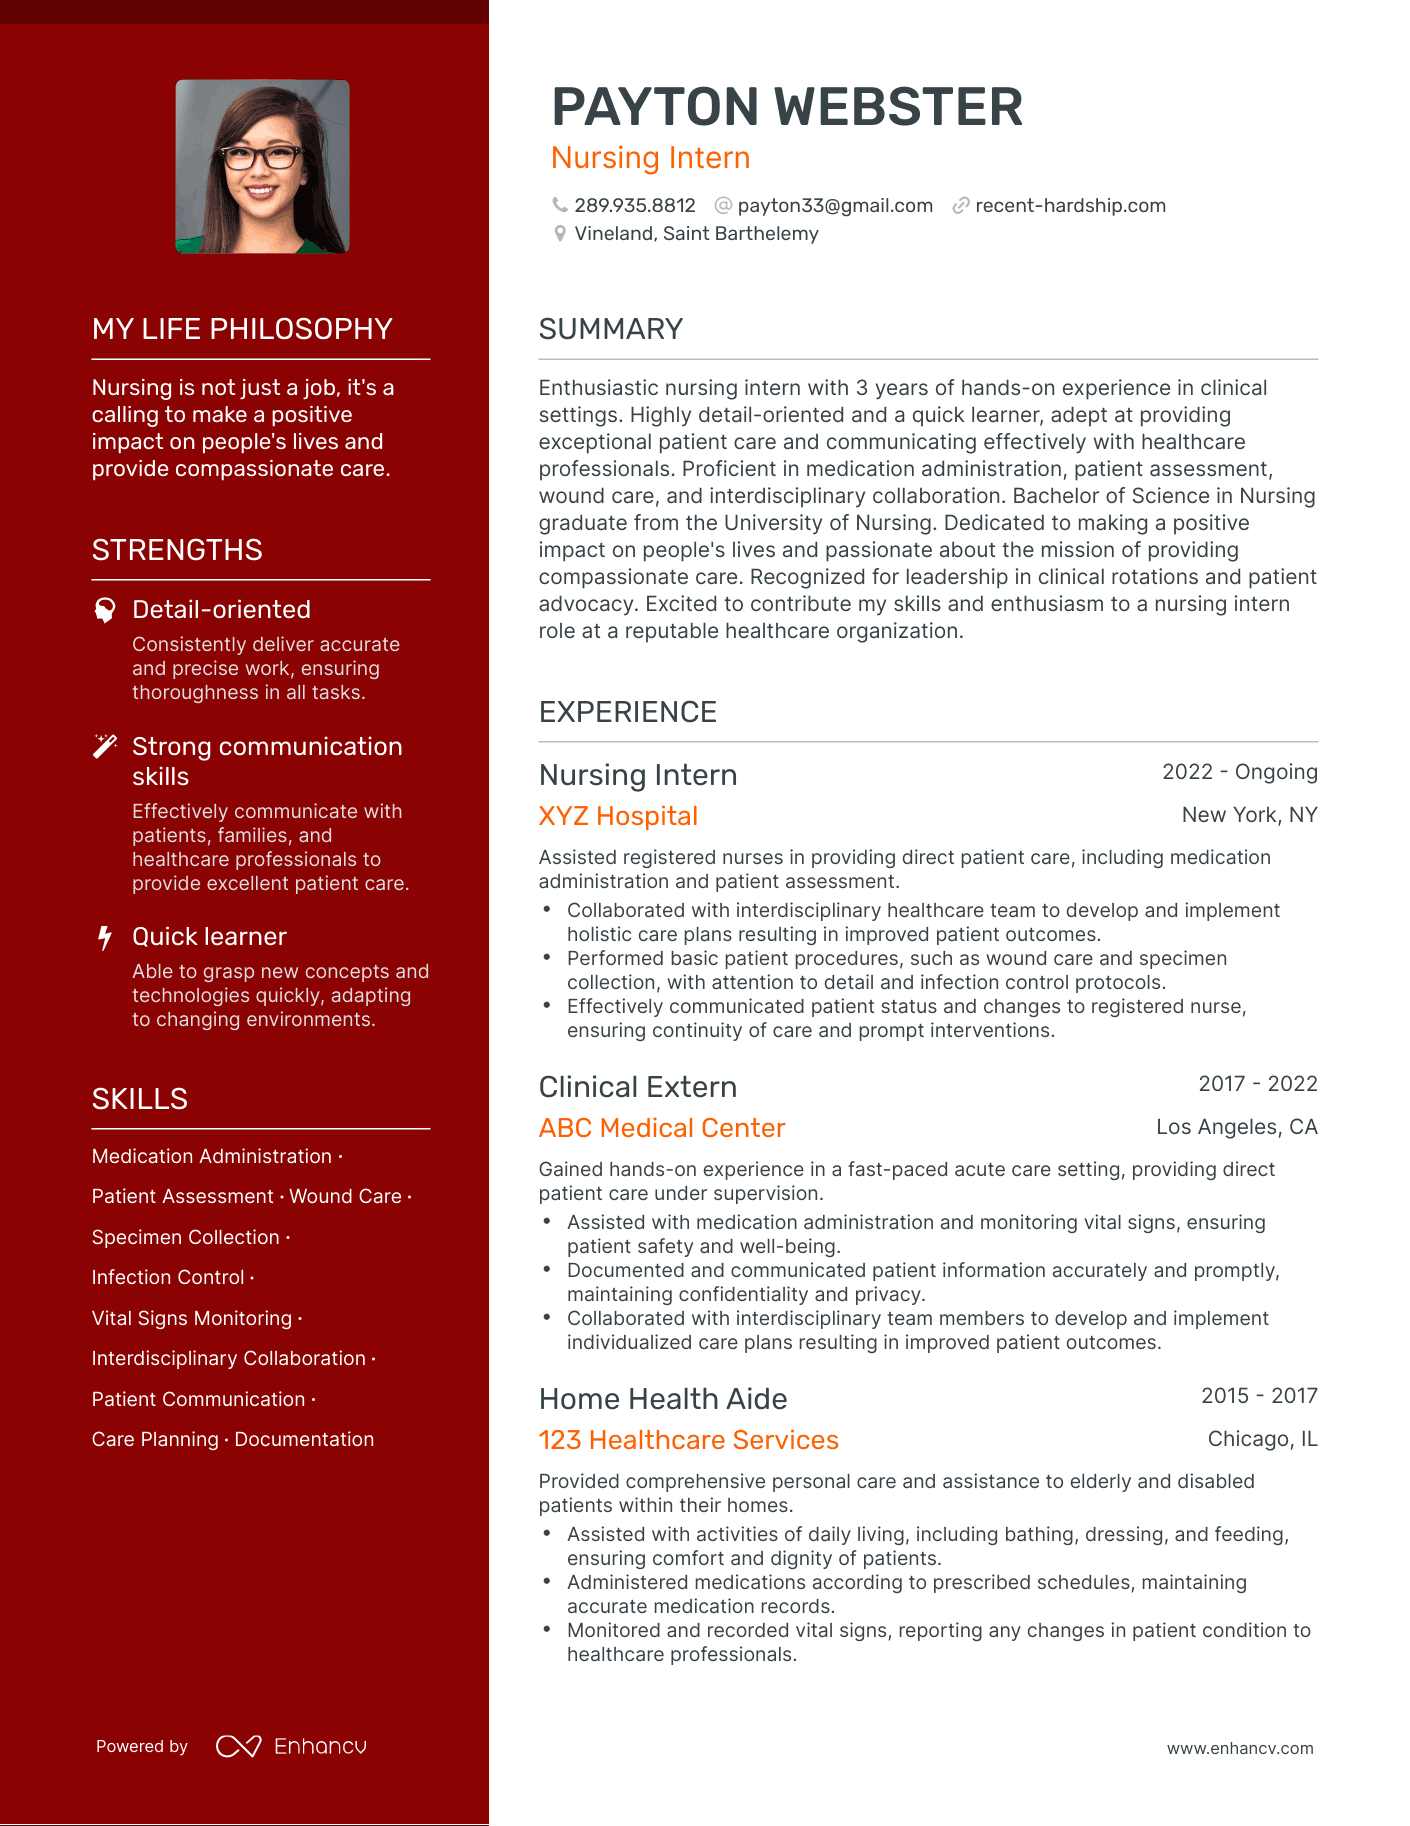 Nursing Intern resume example